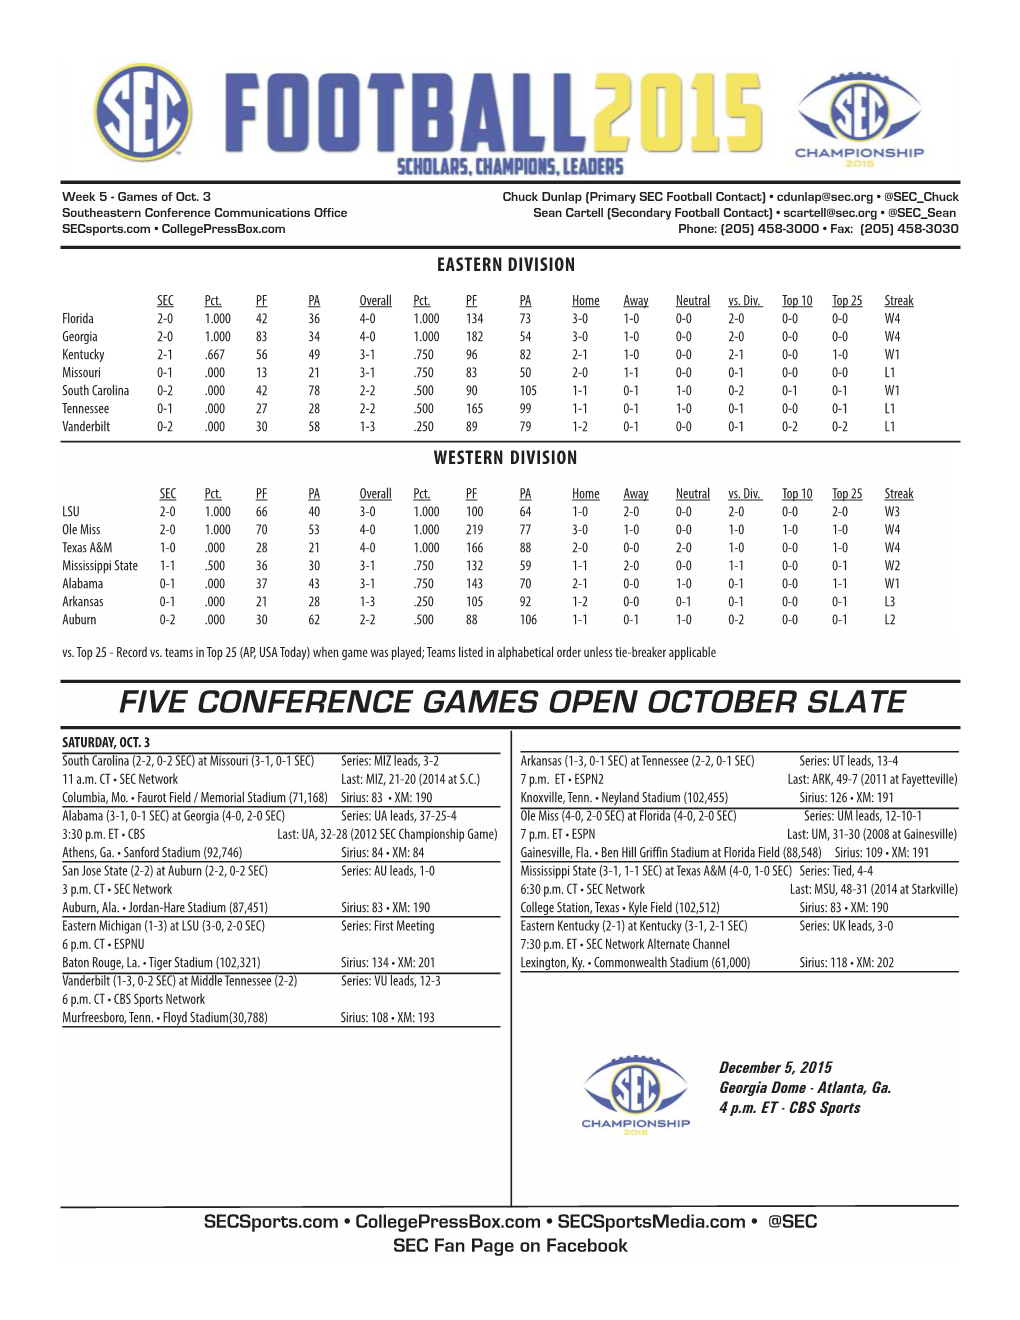 Five Conference Games Open October Slate